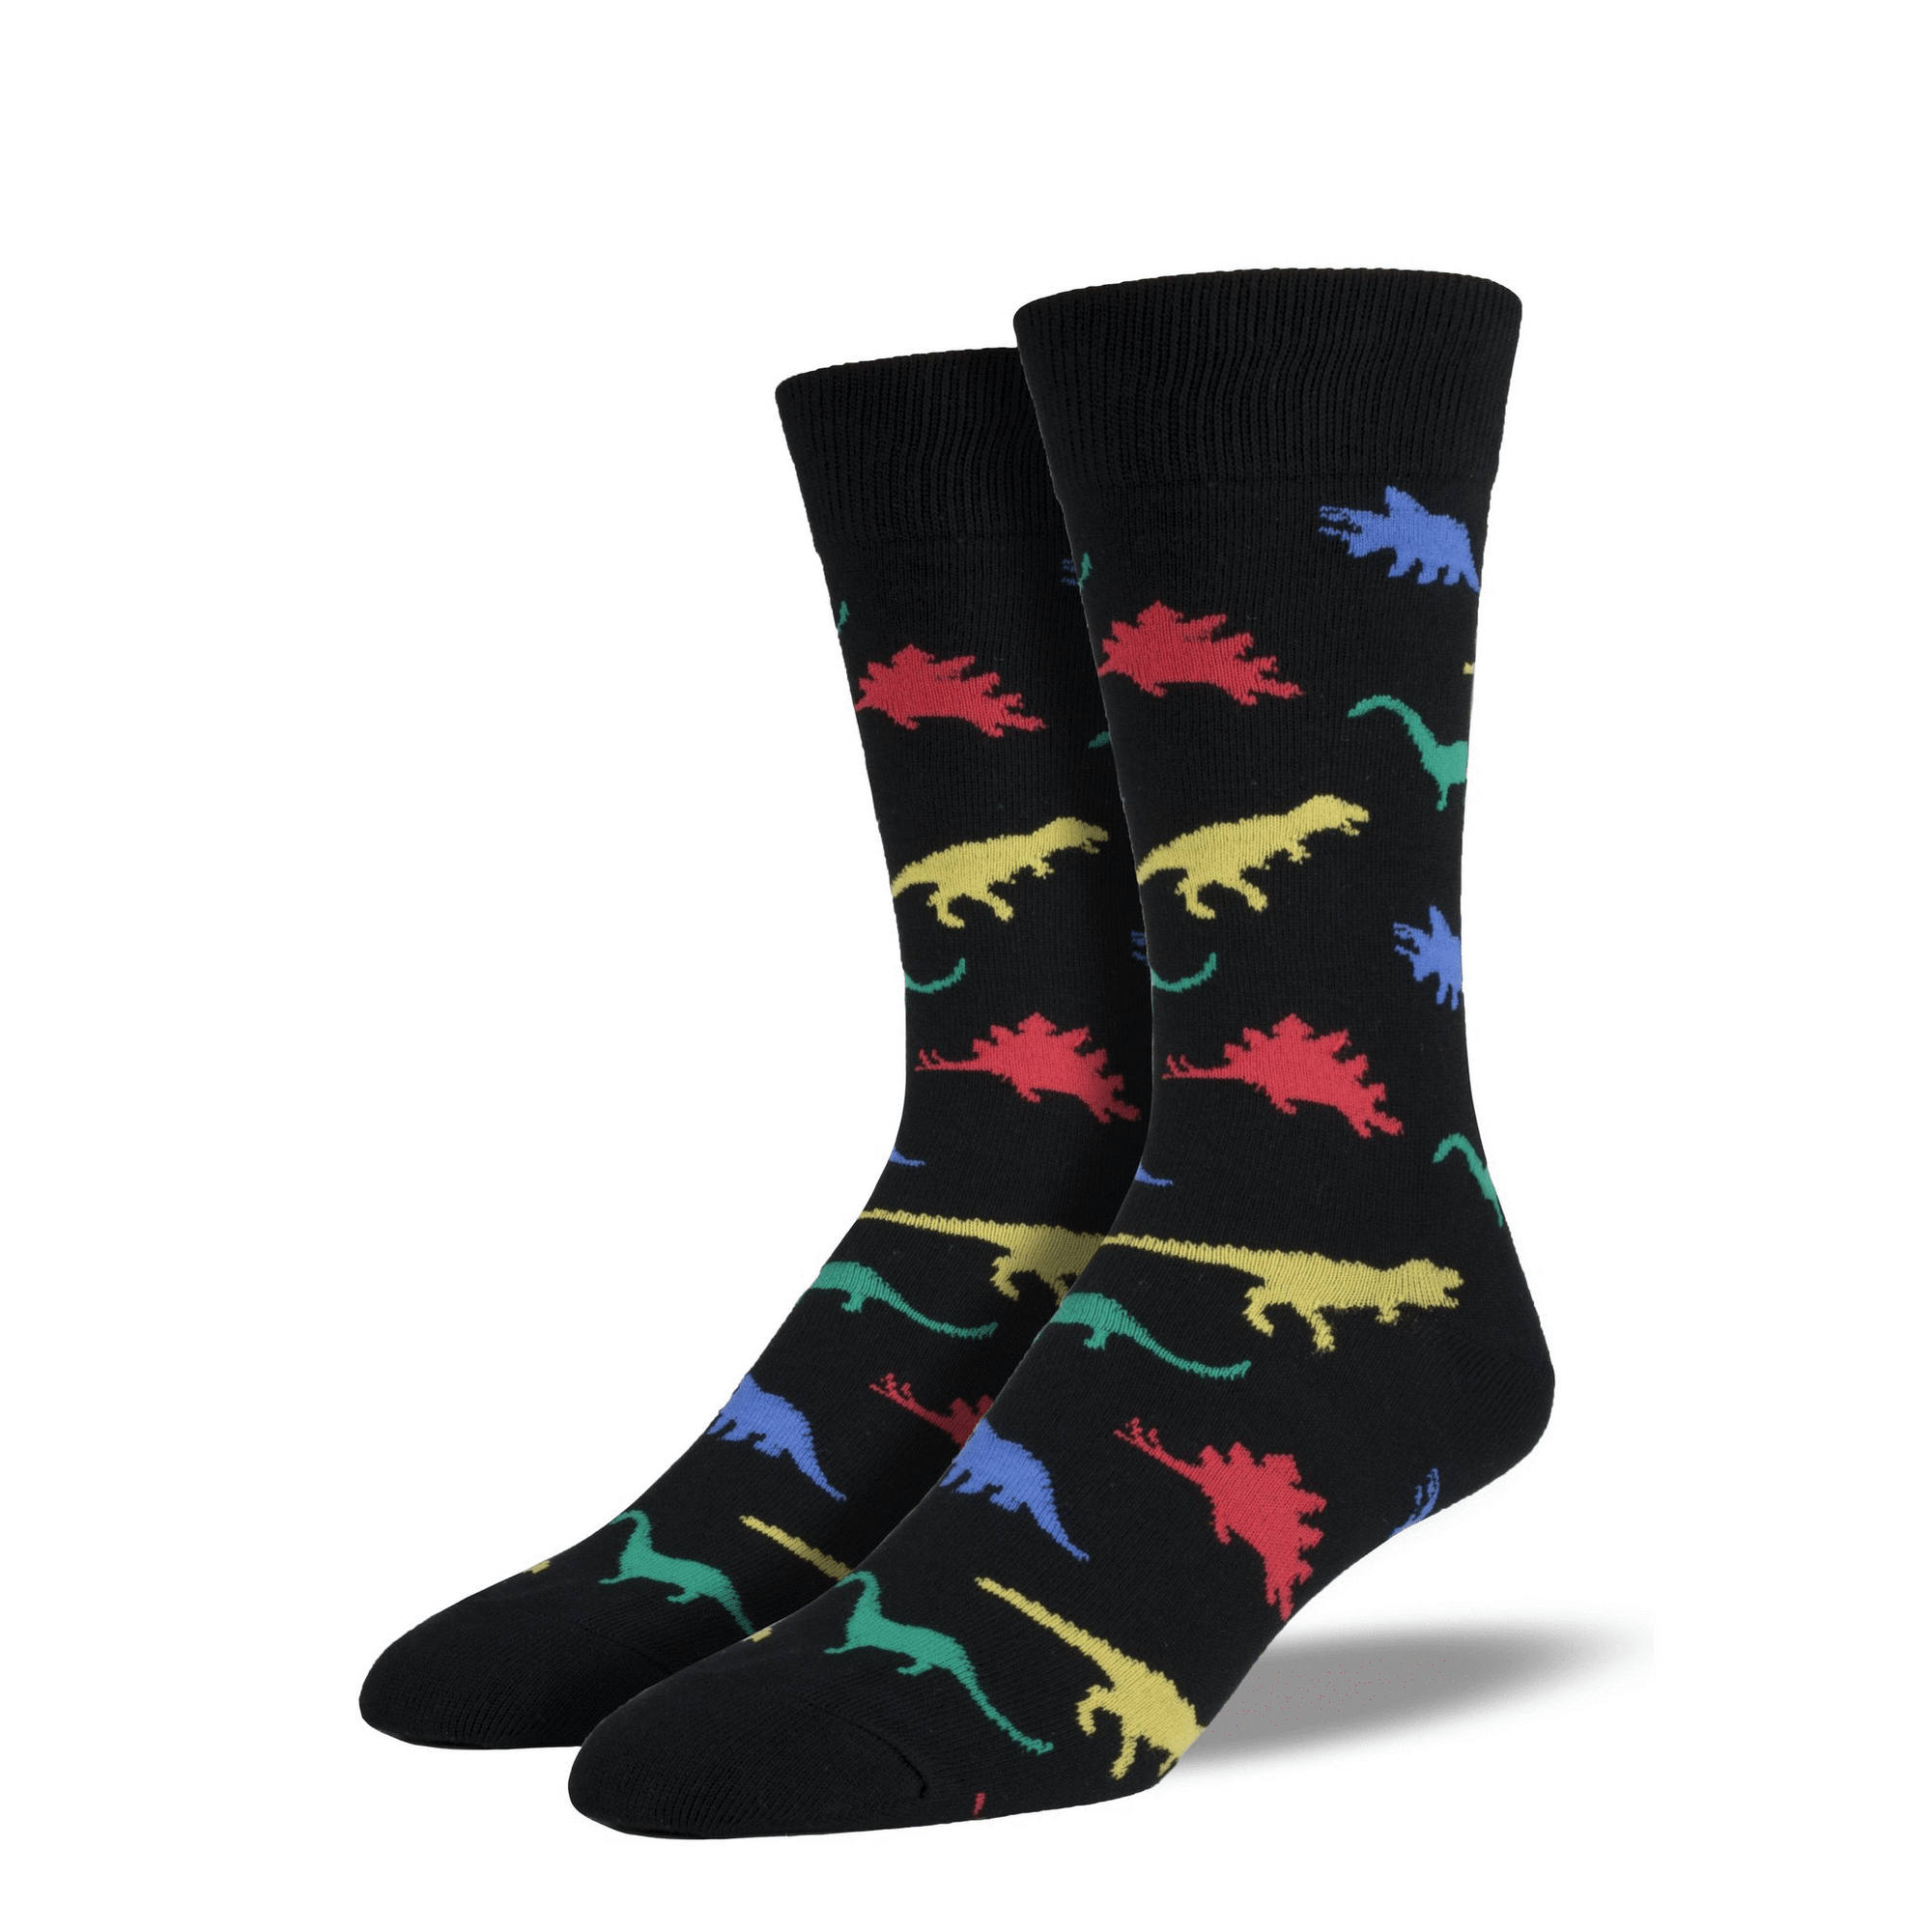 Dinosaur socks - black - mens Sock Smith Clothing/Accessories